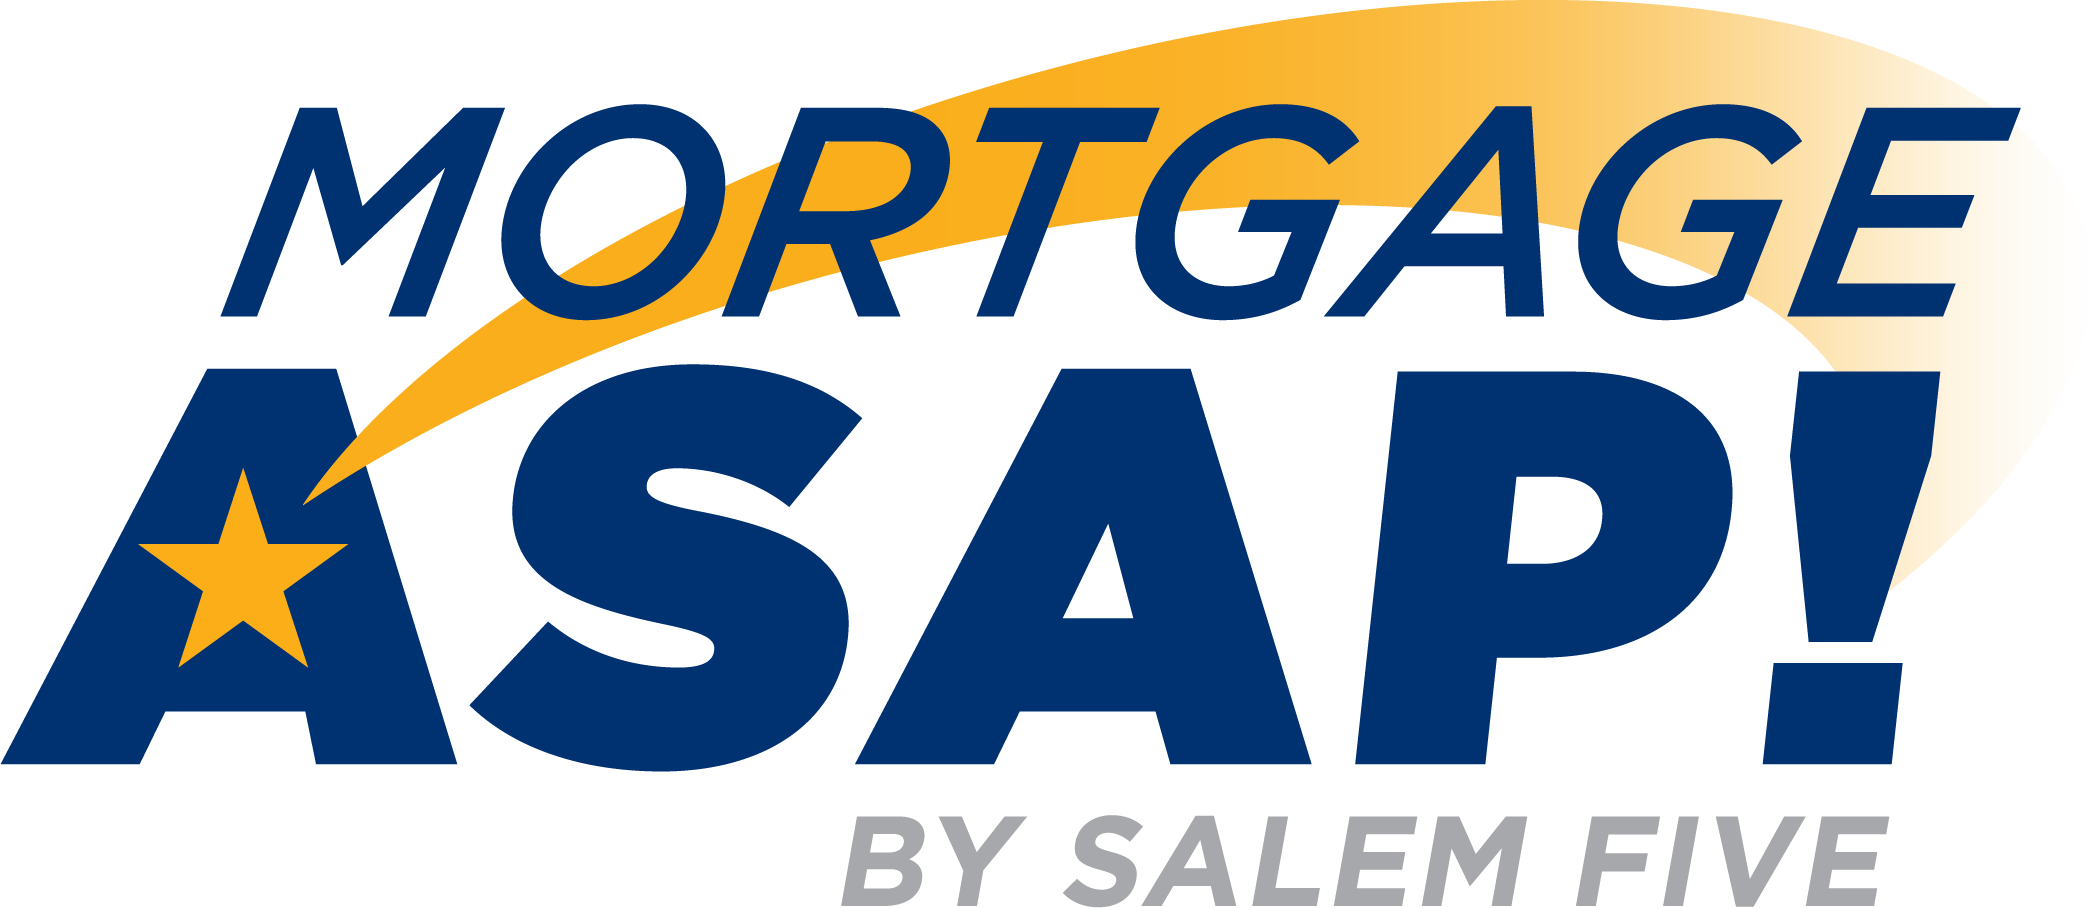 Salem Five Mortgage ASAP Logo